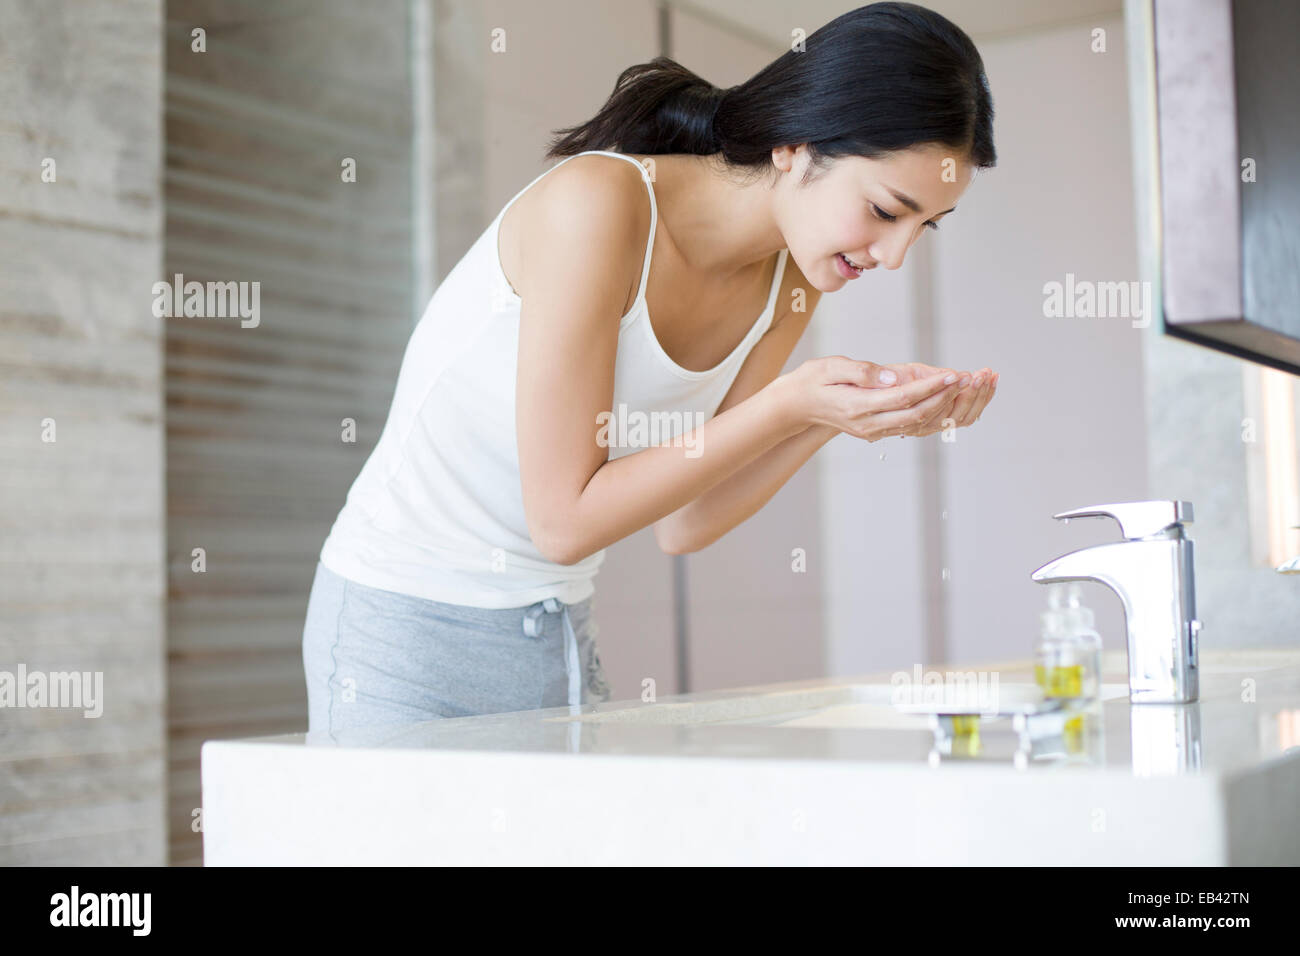 Young woman washing face Stock Photo